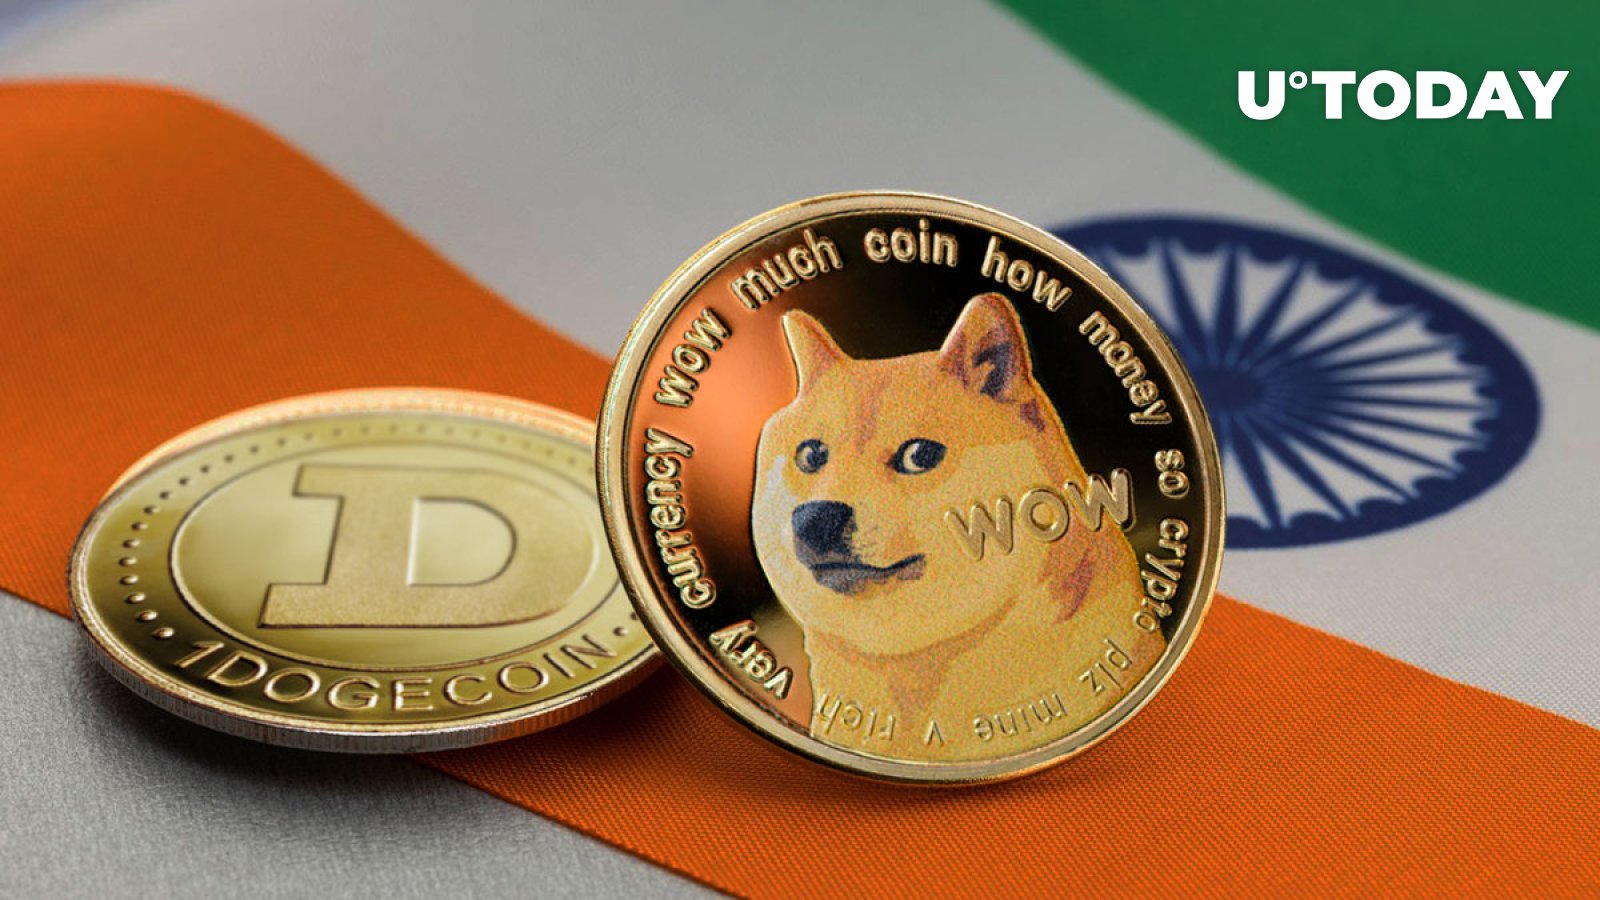 Dogecoin (DOGE) Listed on Major Indian Crypto Exchange: Details